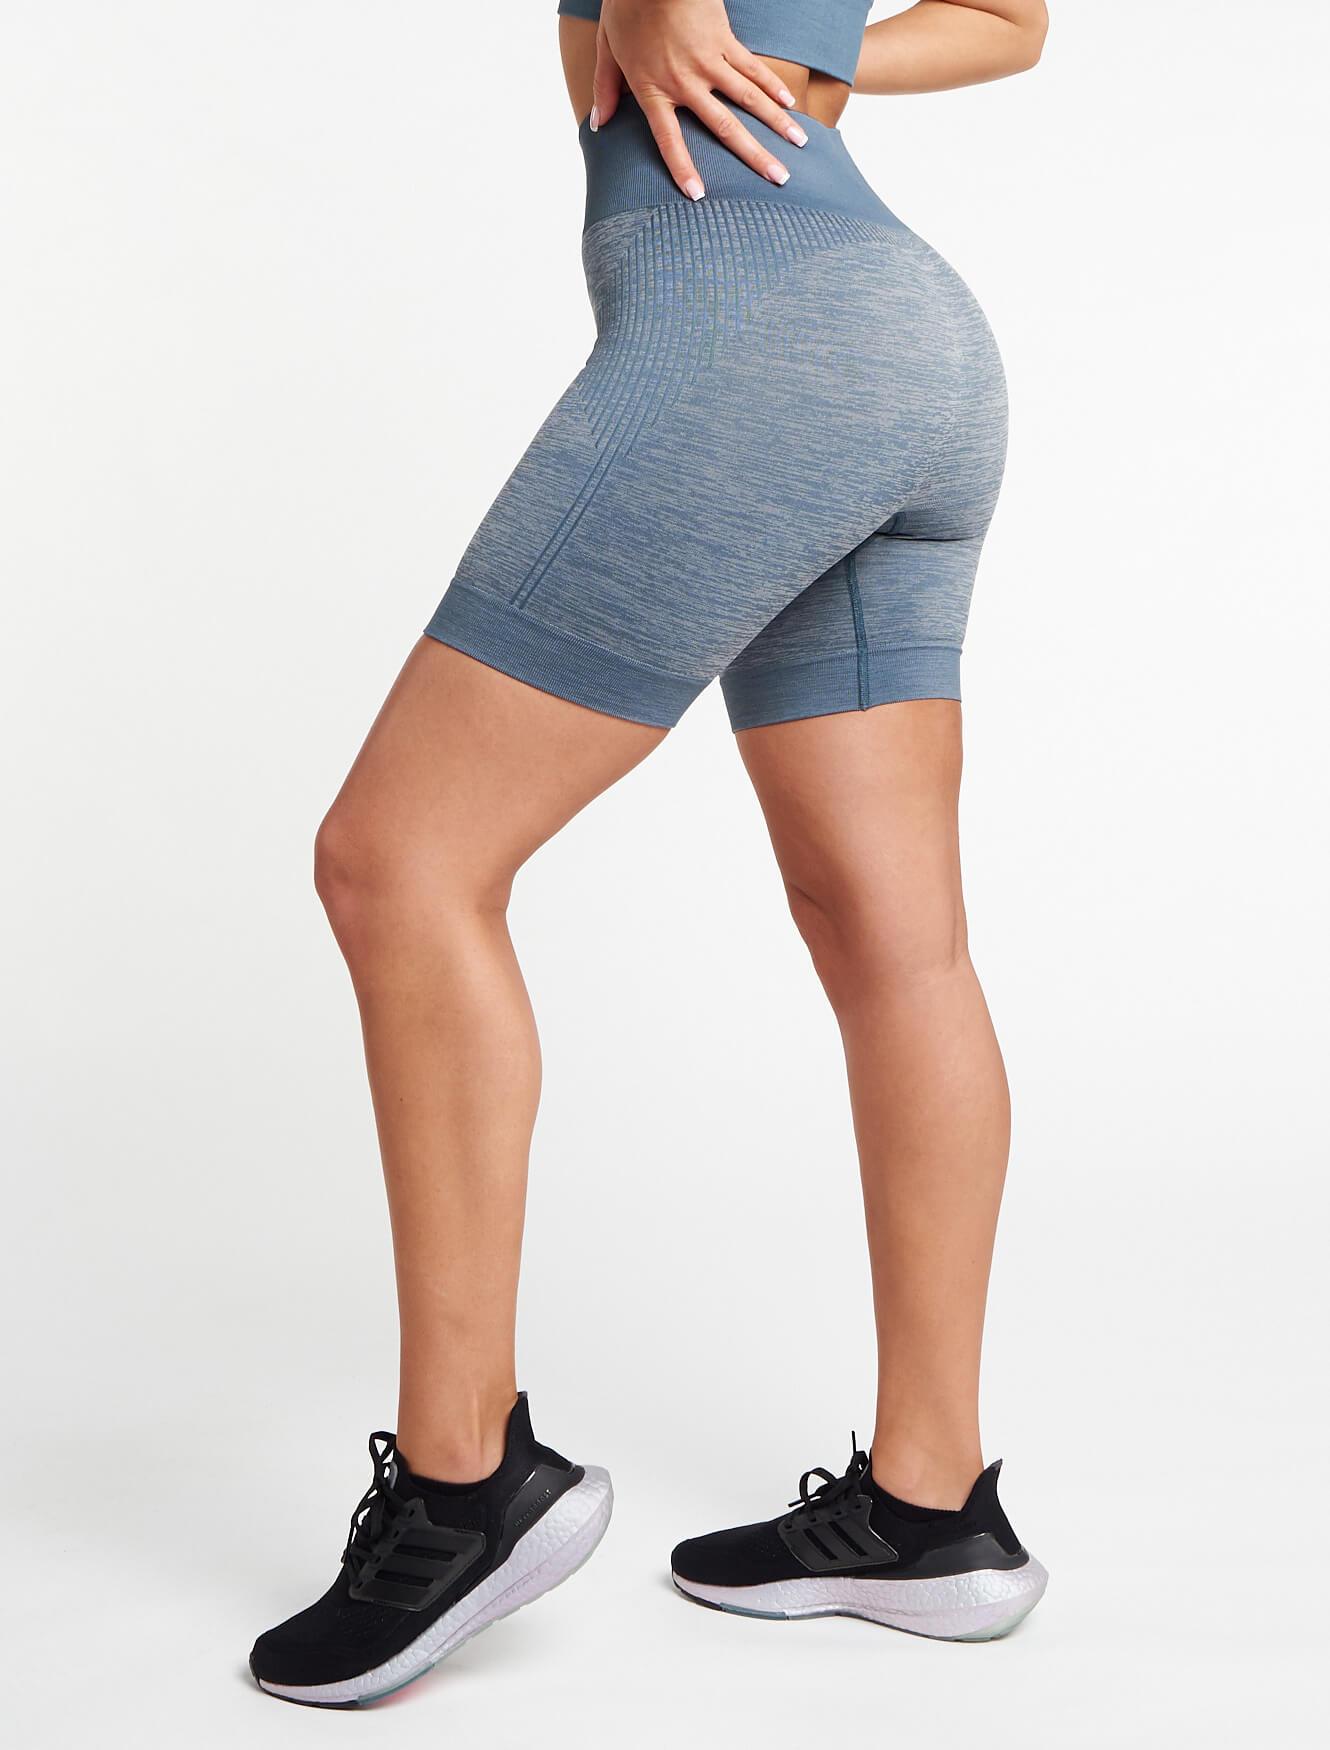 ADAPT Seamless Shorts / Slate Blue Pursue Fitness 6